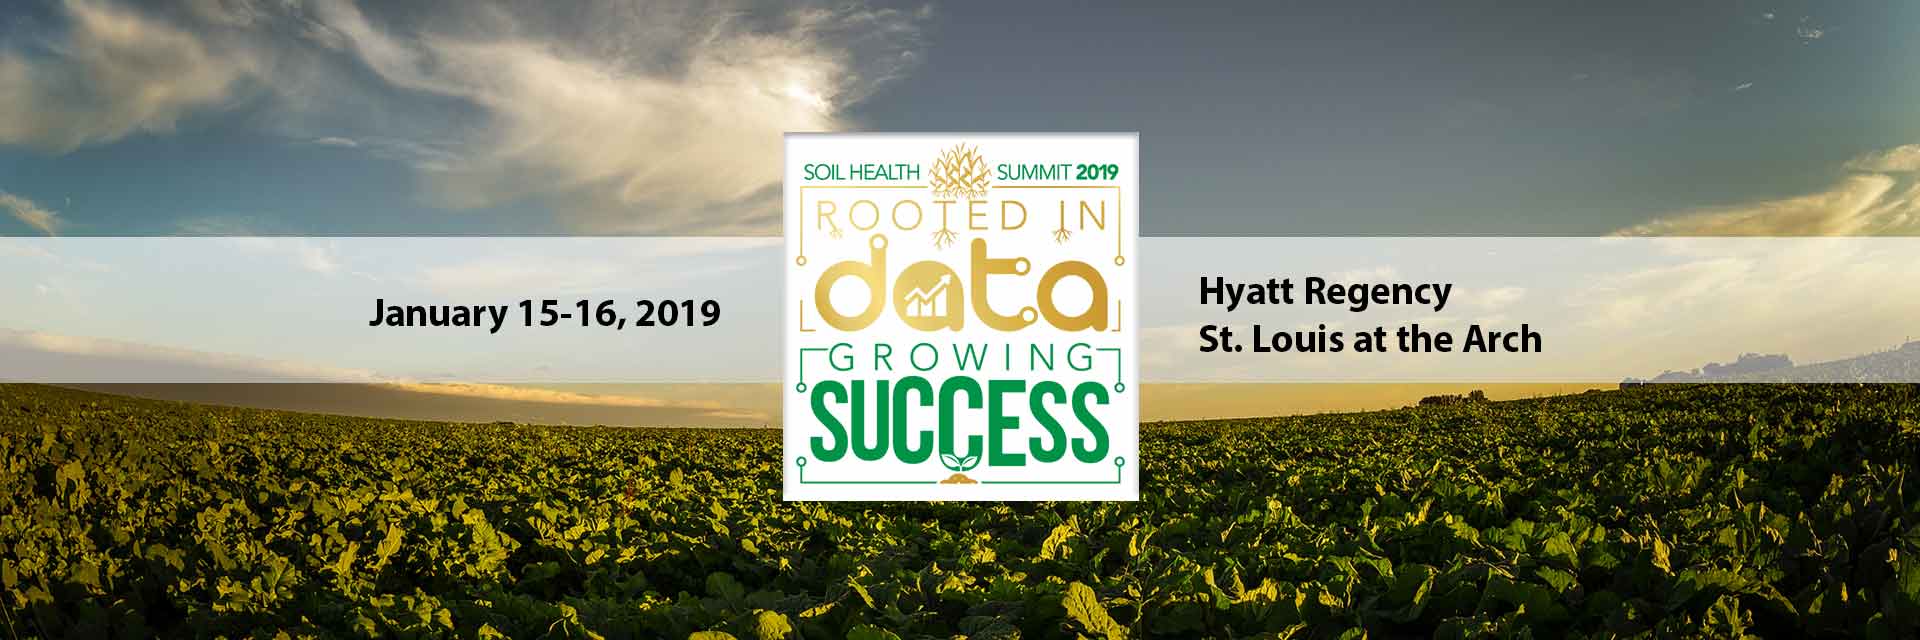 Soil Health Summit 2019 logo